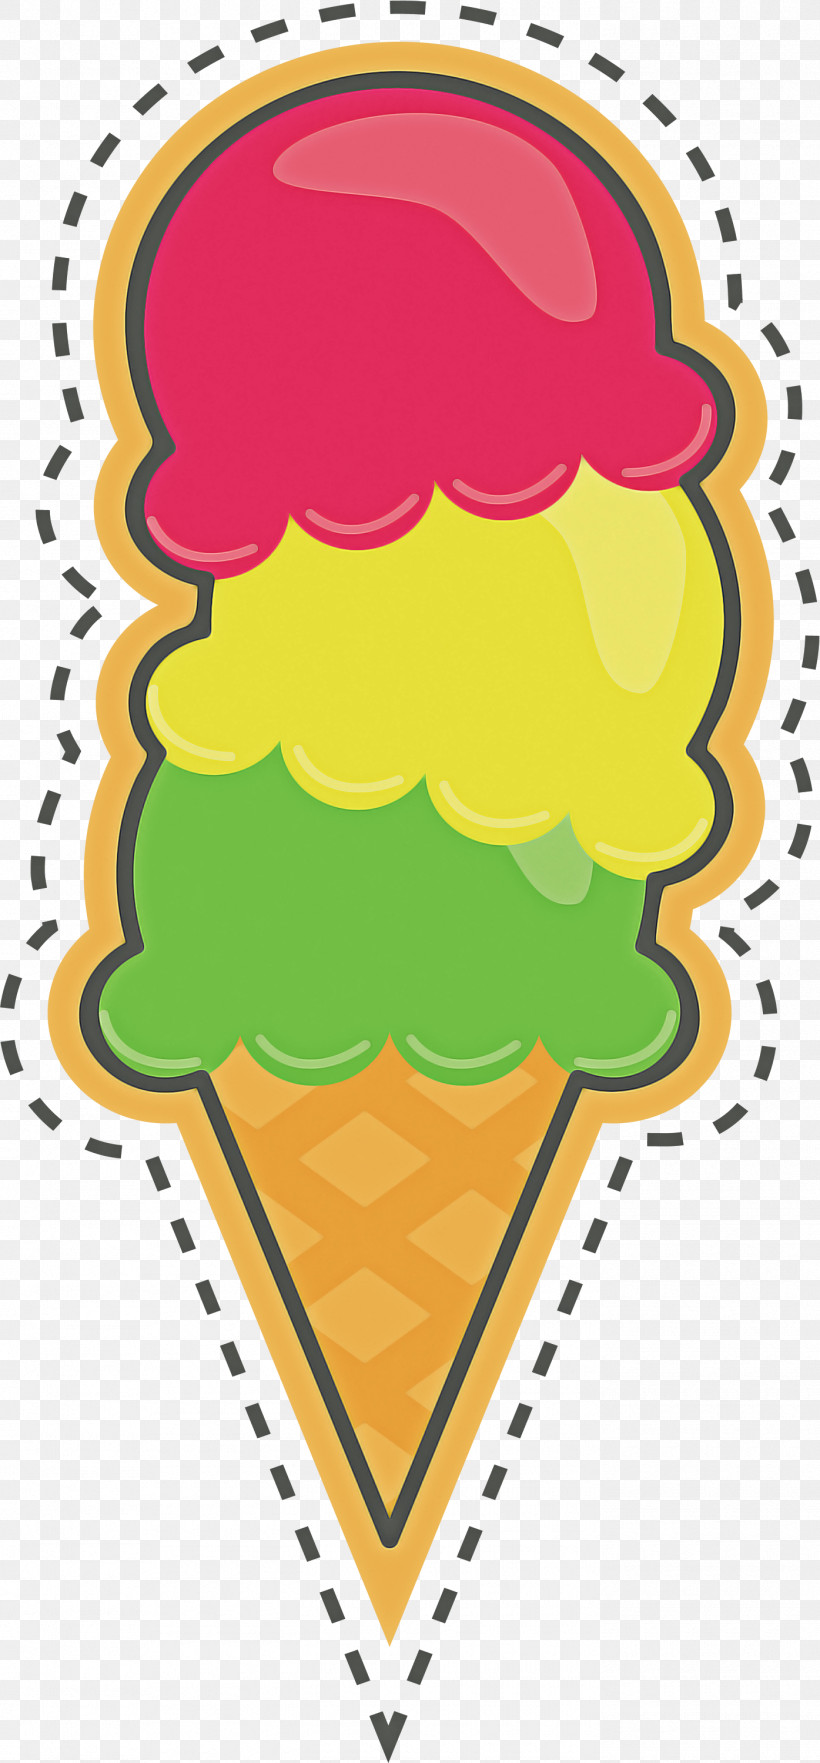 Ice Cream Cone Yellow Frozen Dessert, PNG, 1395x3000px, Ice Cream Cone, Frozen Dessert, Yellow Download Free